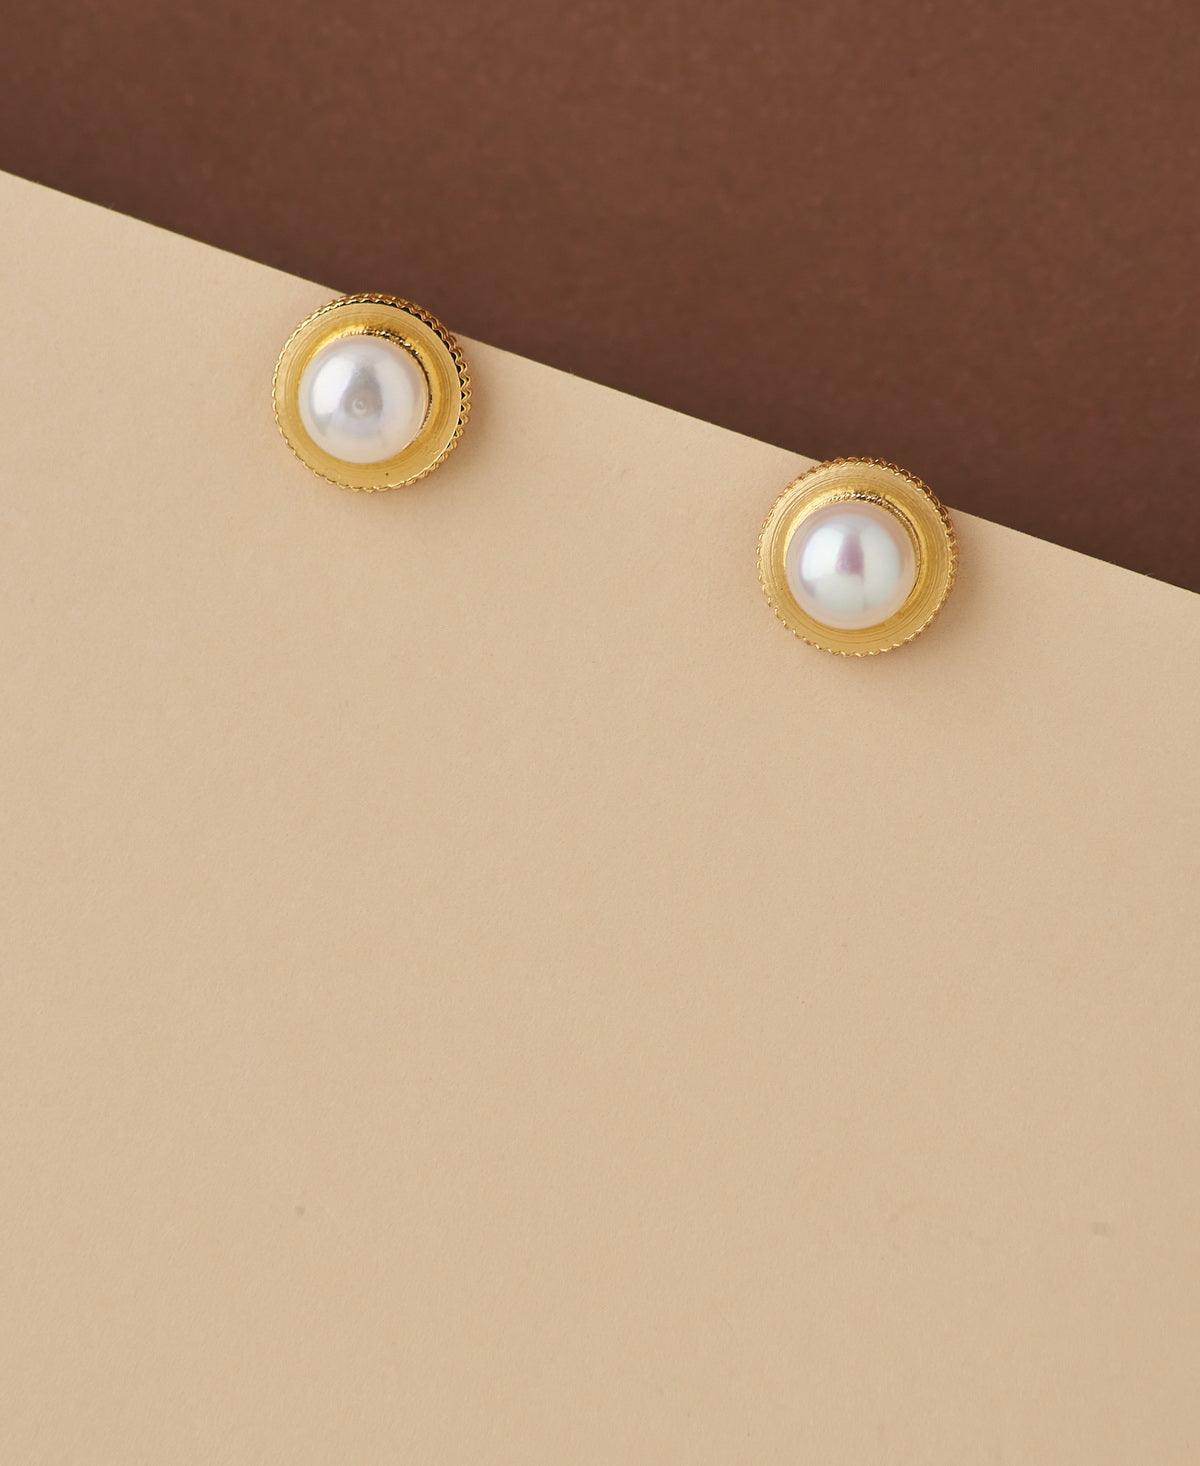 Classy White Pearl Stud Earring - Chandrani Pearls